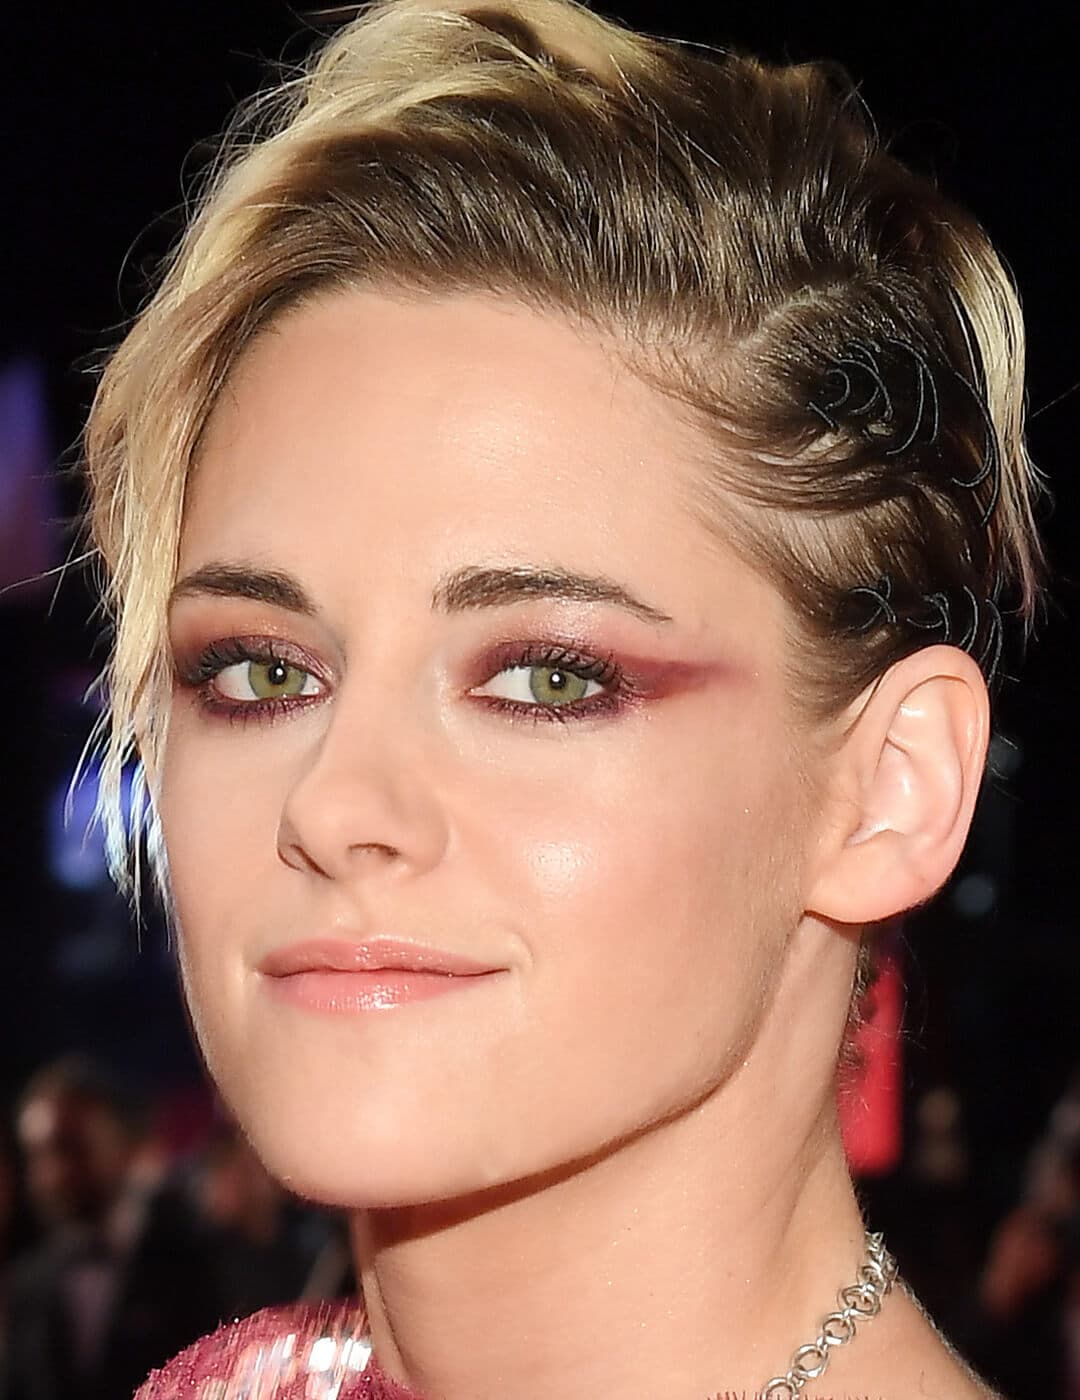 Close-up of Kristen Stewart rocking a rose eyeshadow and maroon cat-eye makeup look